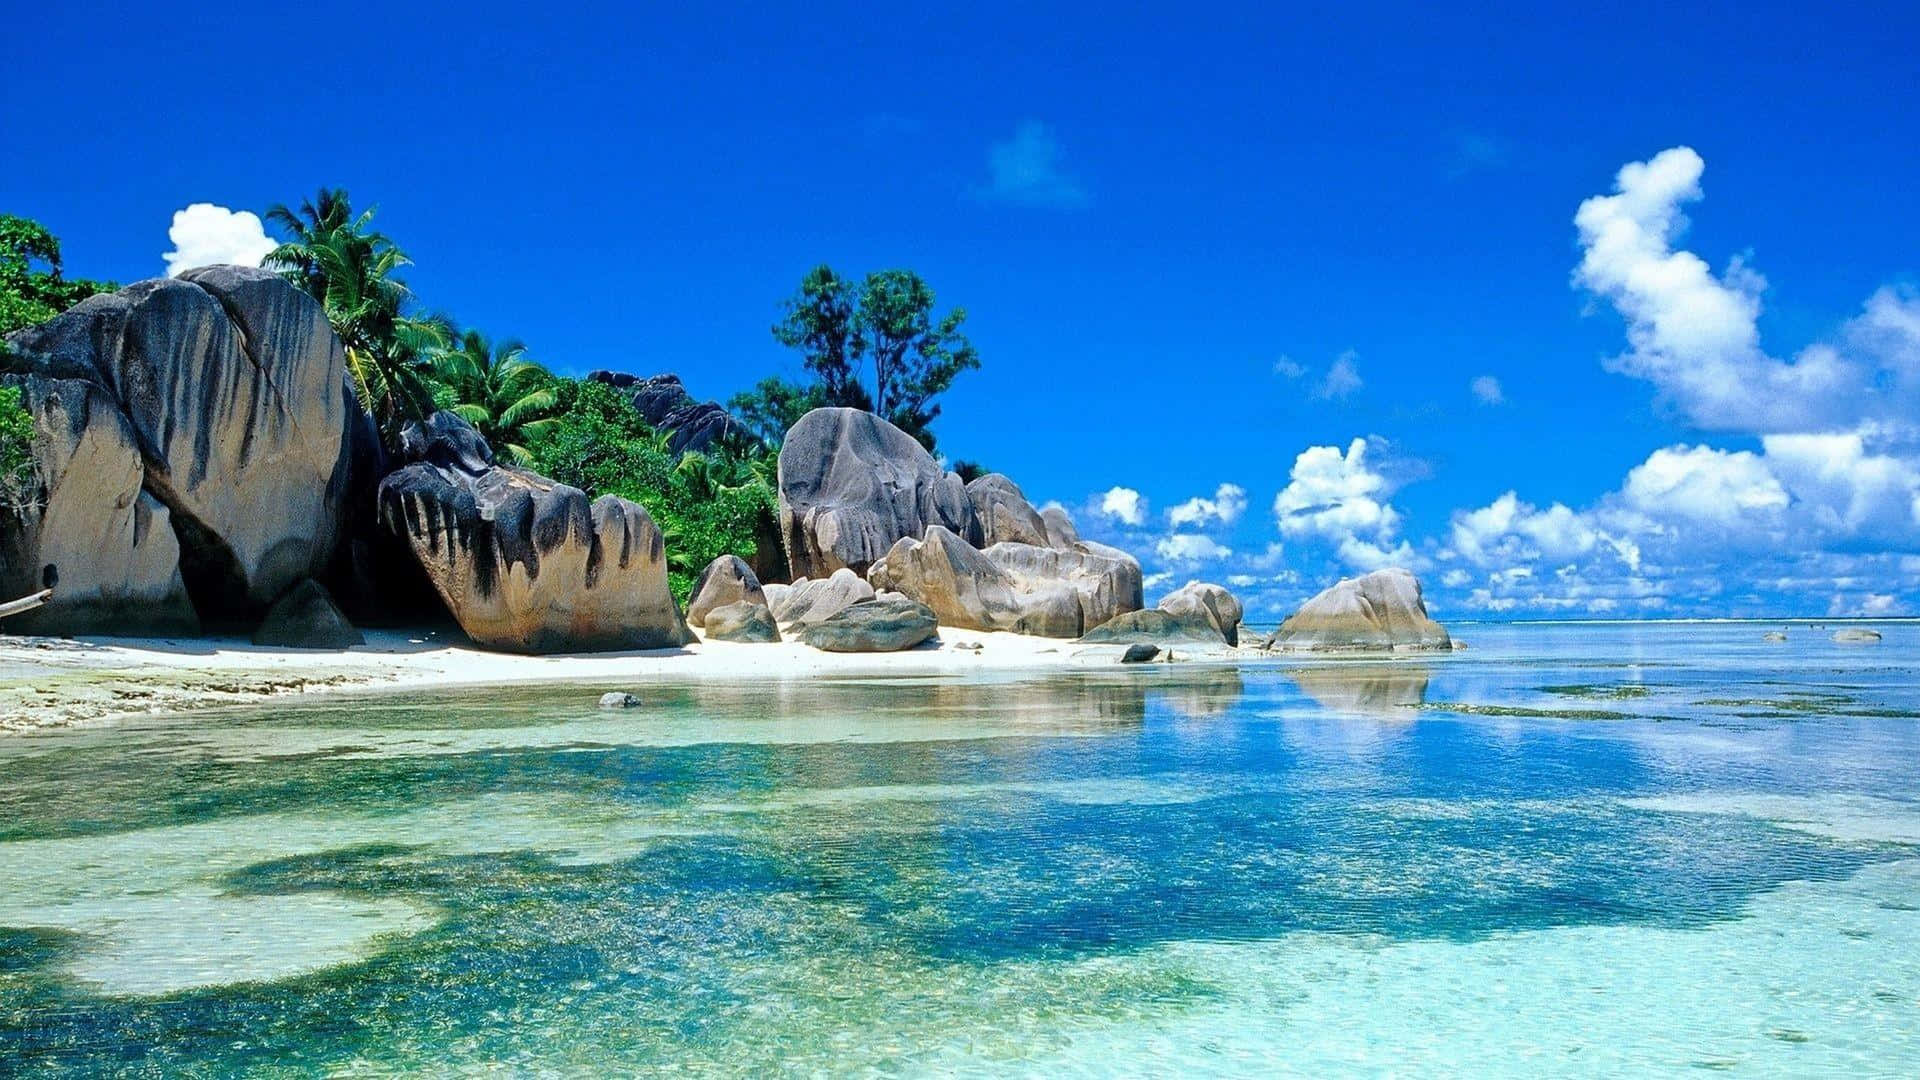 720p Beach Seychelles Island Background